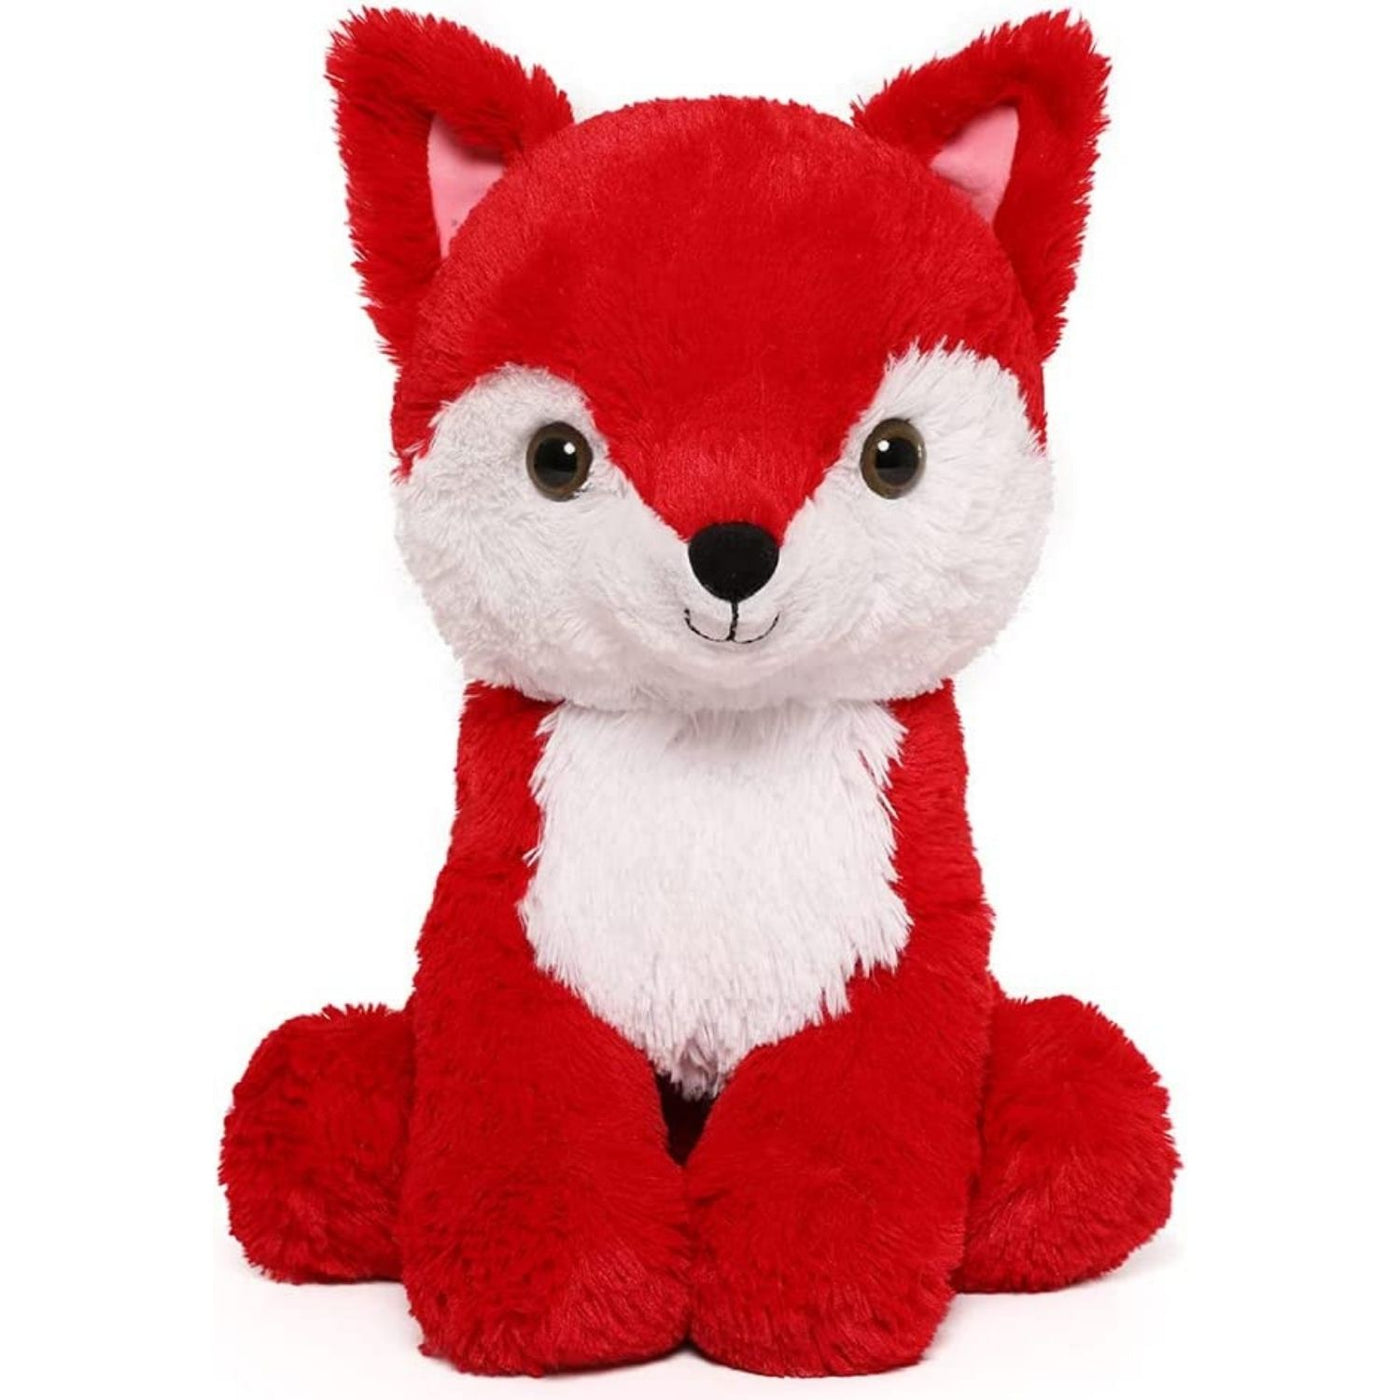 Fuchs Plüschtier Kuscheltier Spielzeug, Rot, 18 Zoll